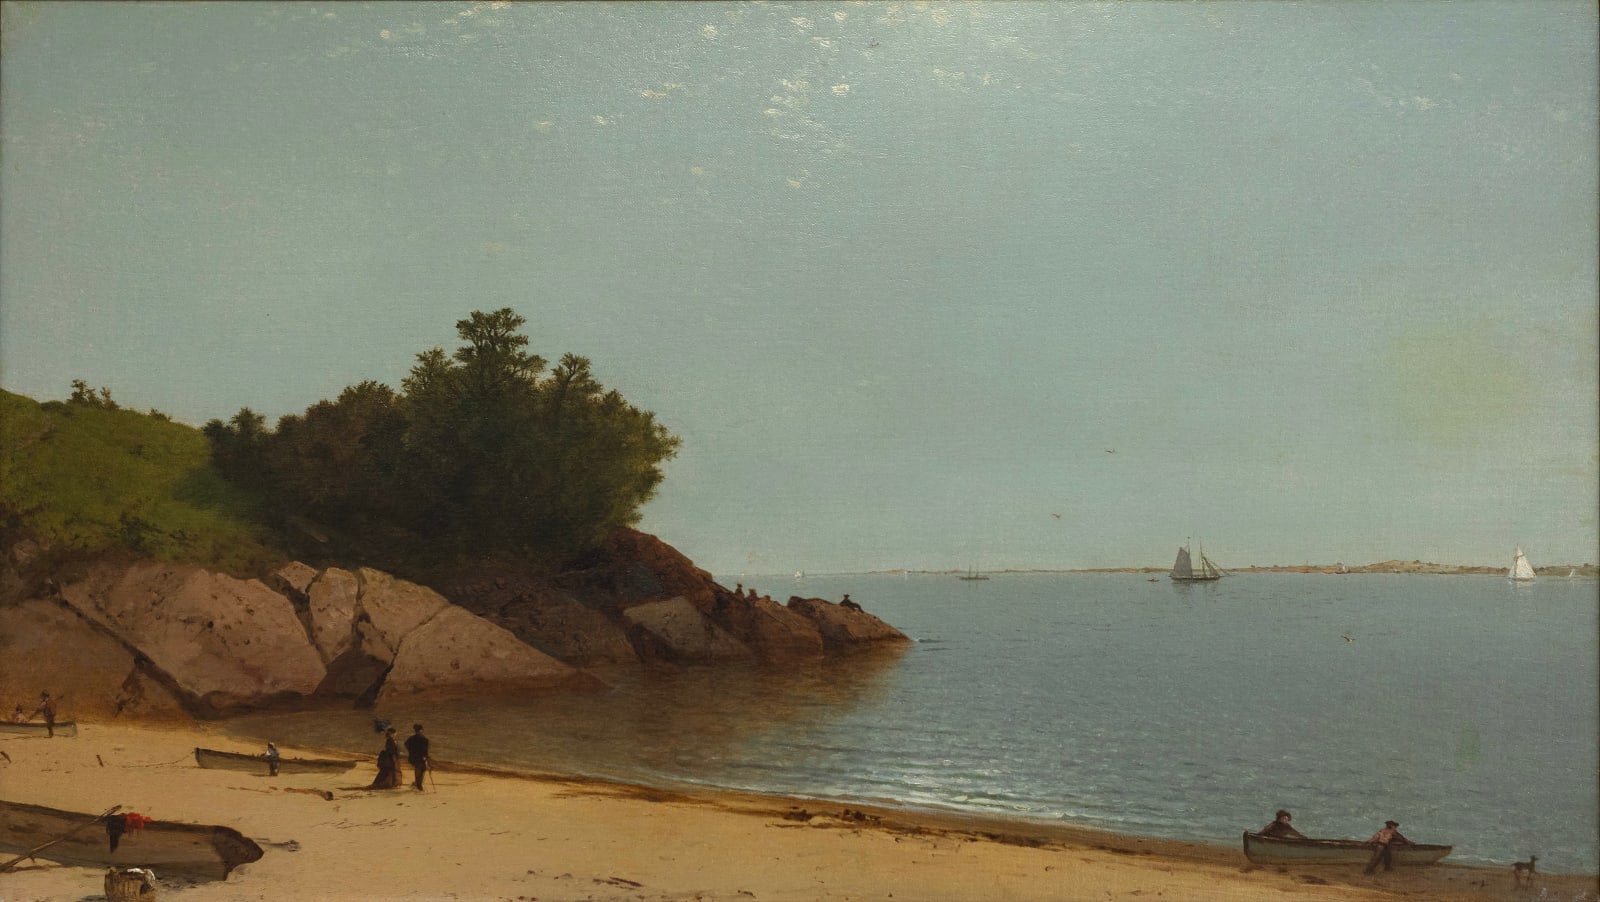 John Frederick Kensett, A Quiet Day on the Beverly Shore, Magnolia, Massachusetts, 1871